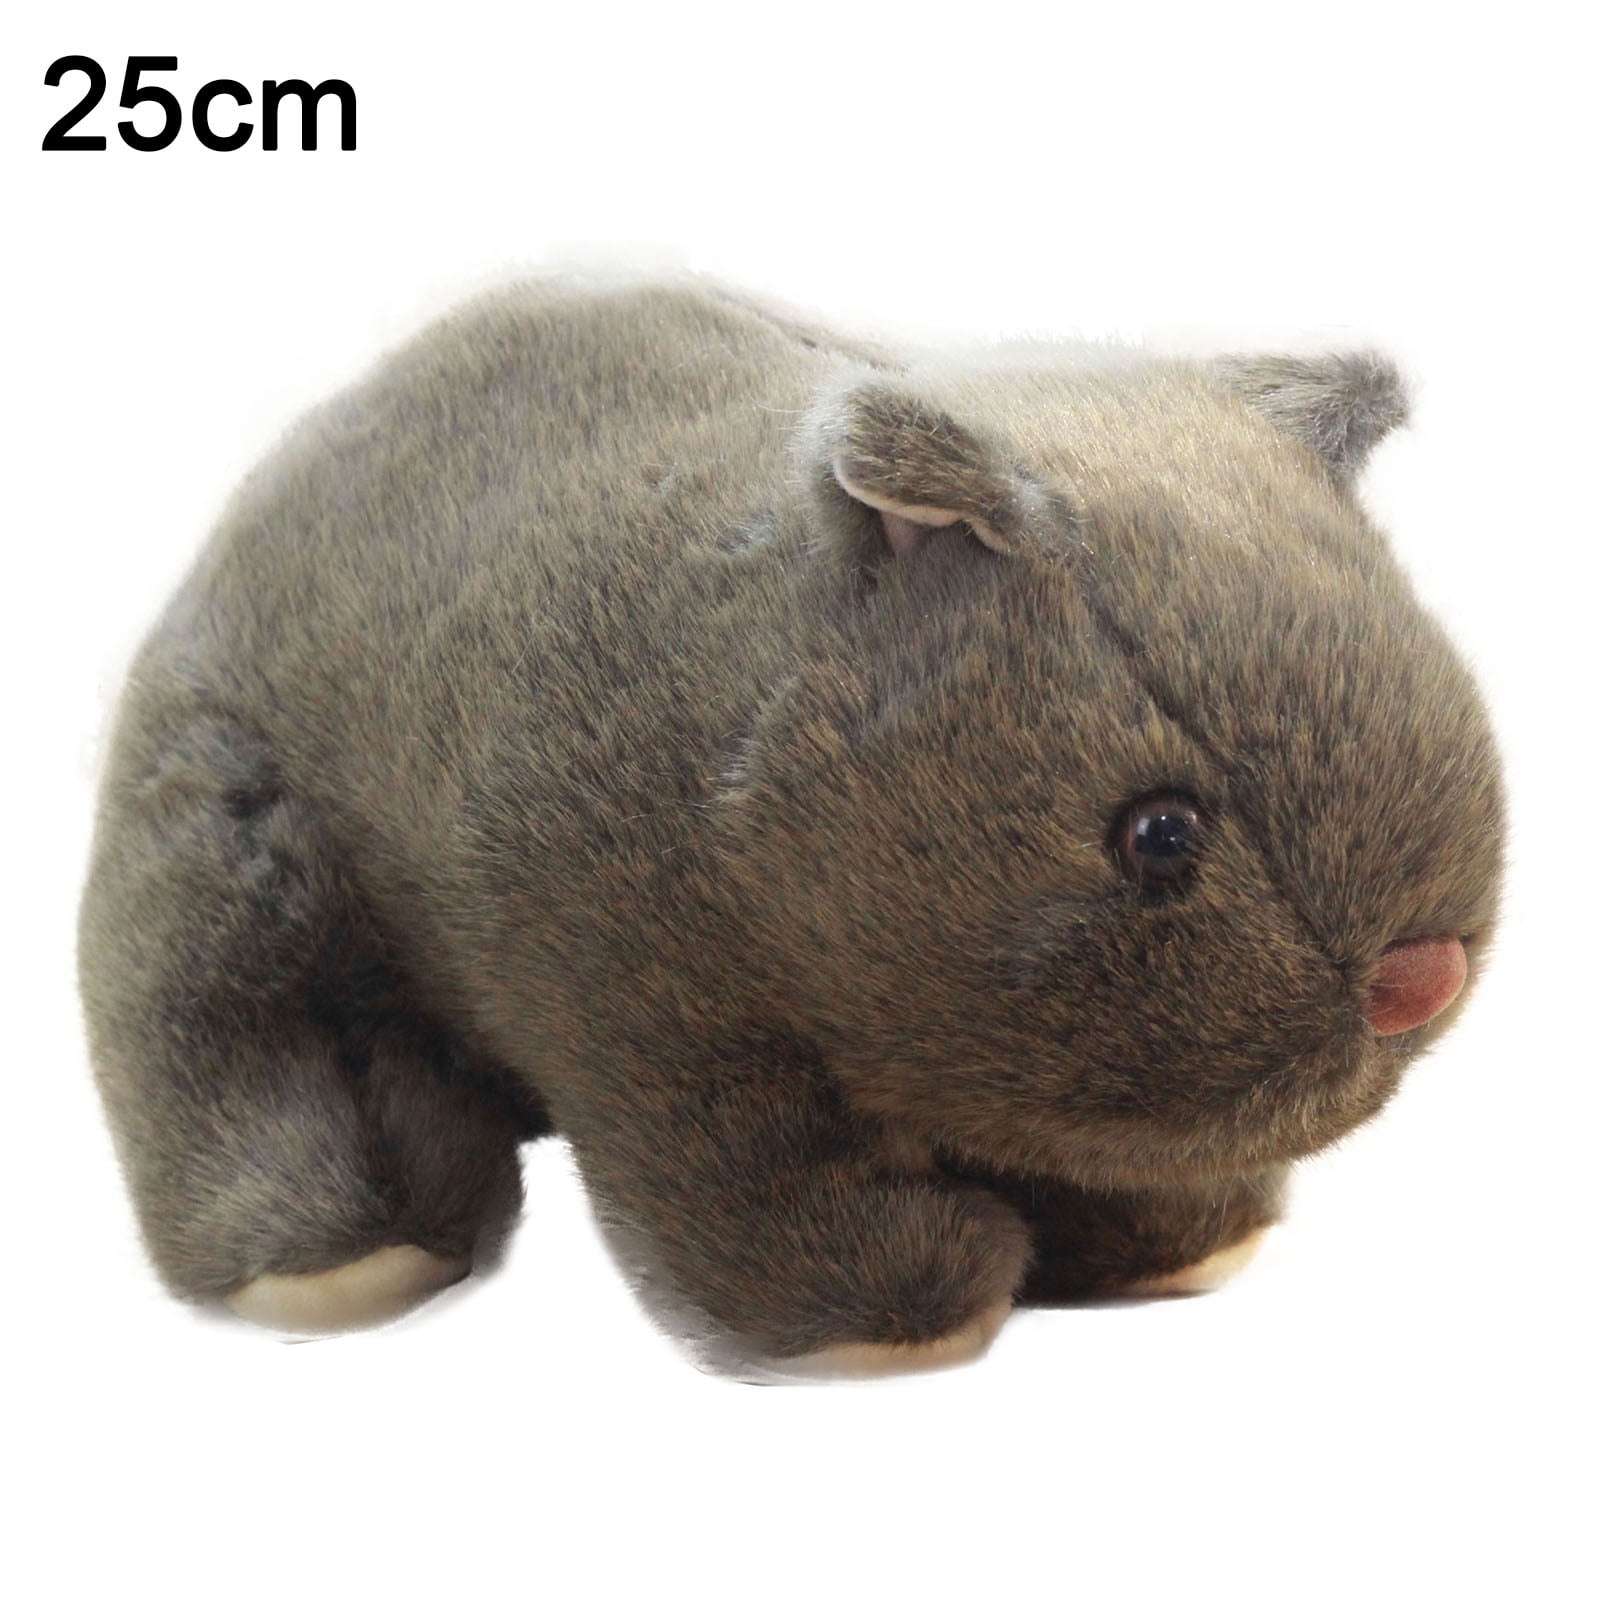 Douglas Cuddle Toys TOOWOOMBA Wombat # 1747 Stuffed Animal Toy for sale online 